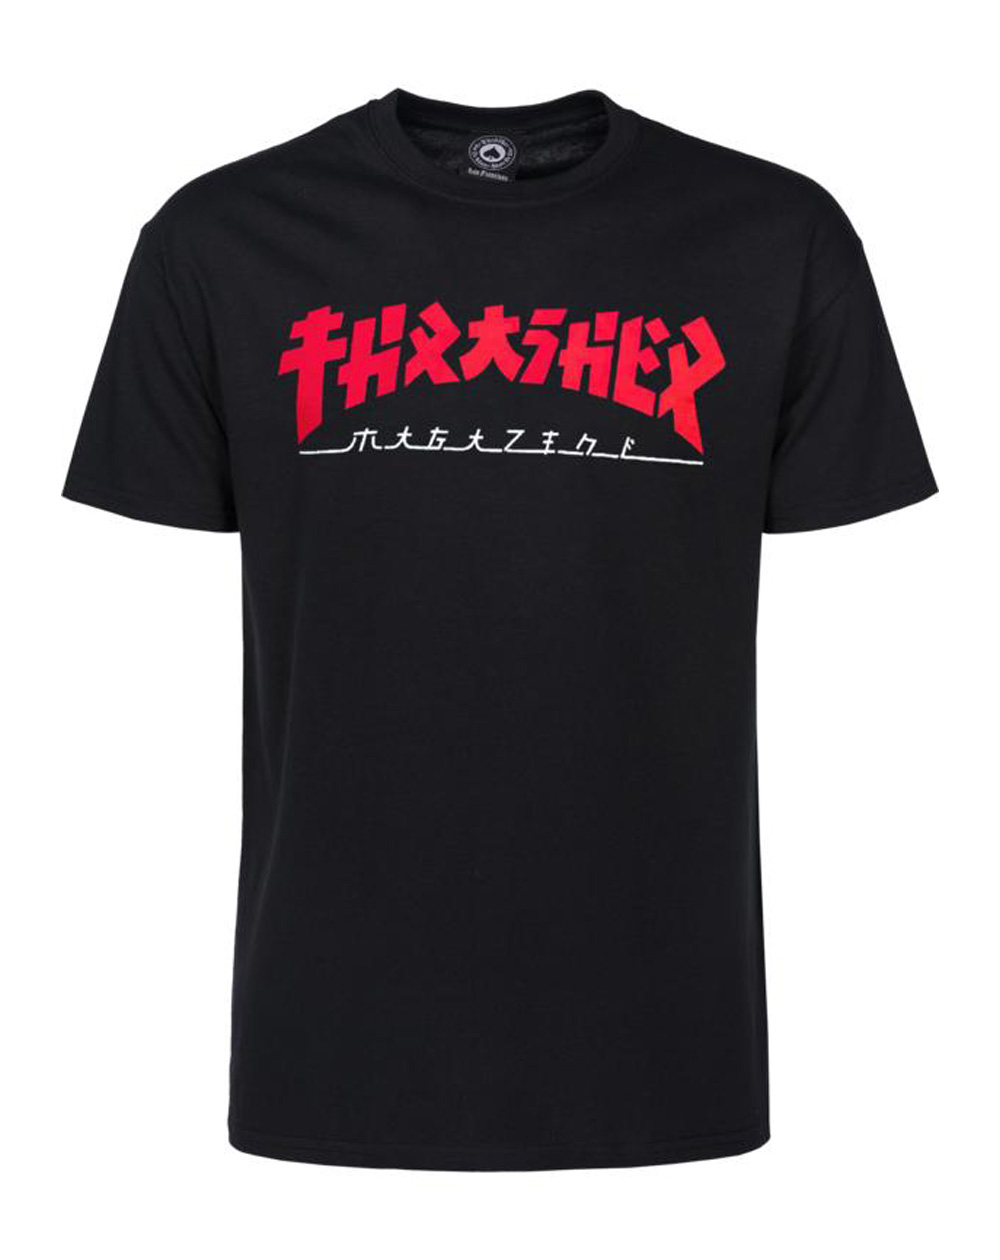 Thrasher Godzilla Camiseta para Homem Black